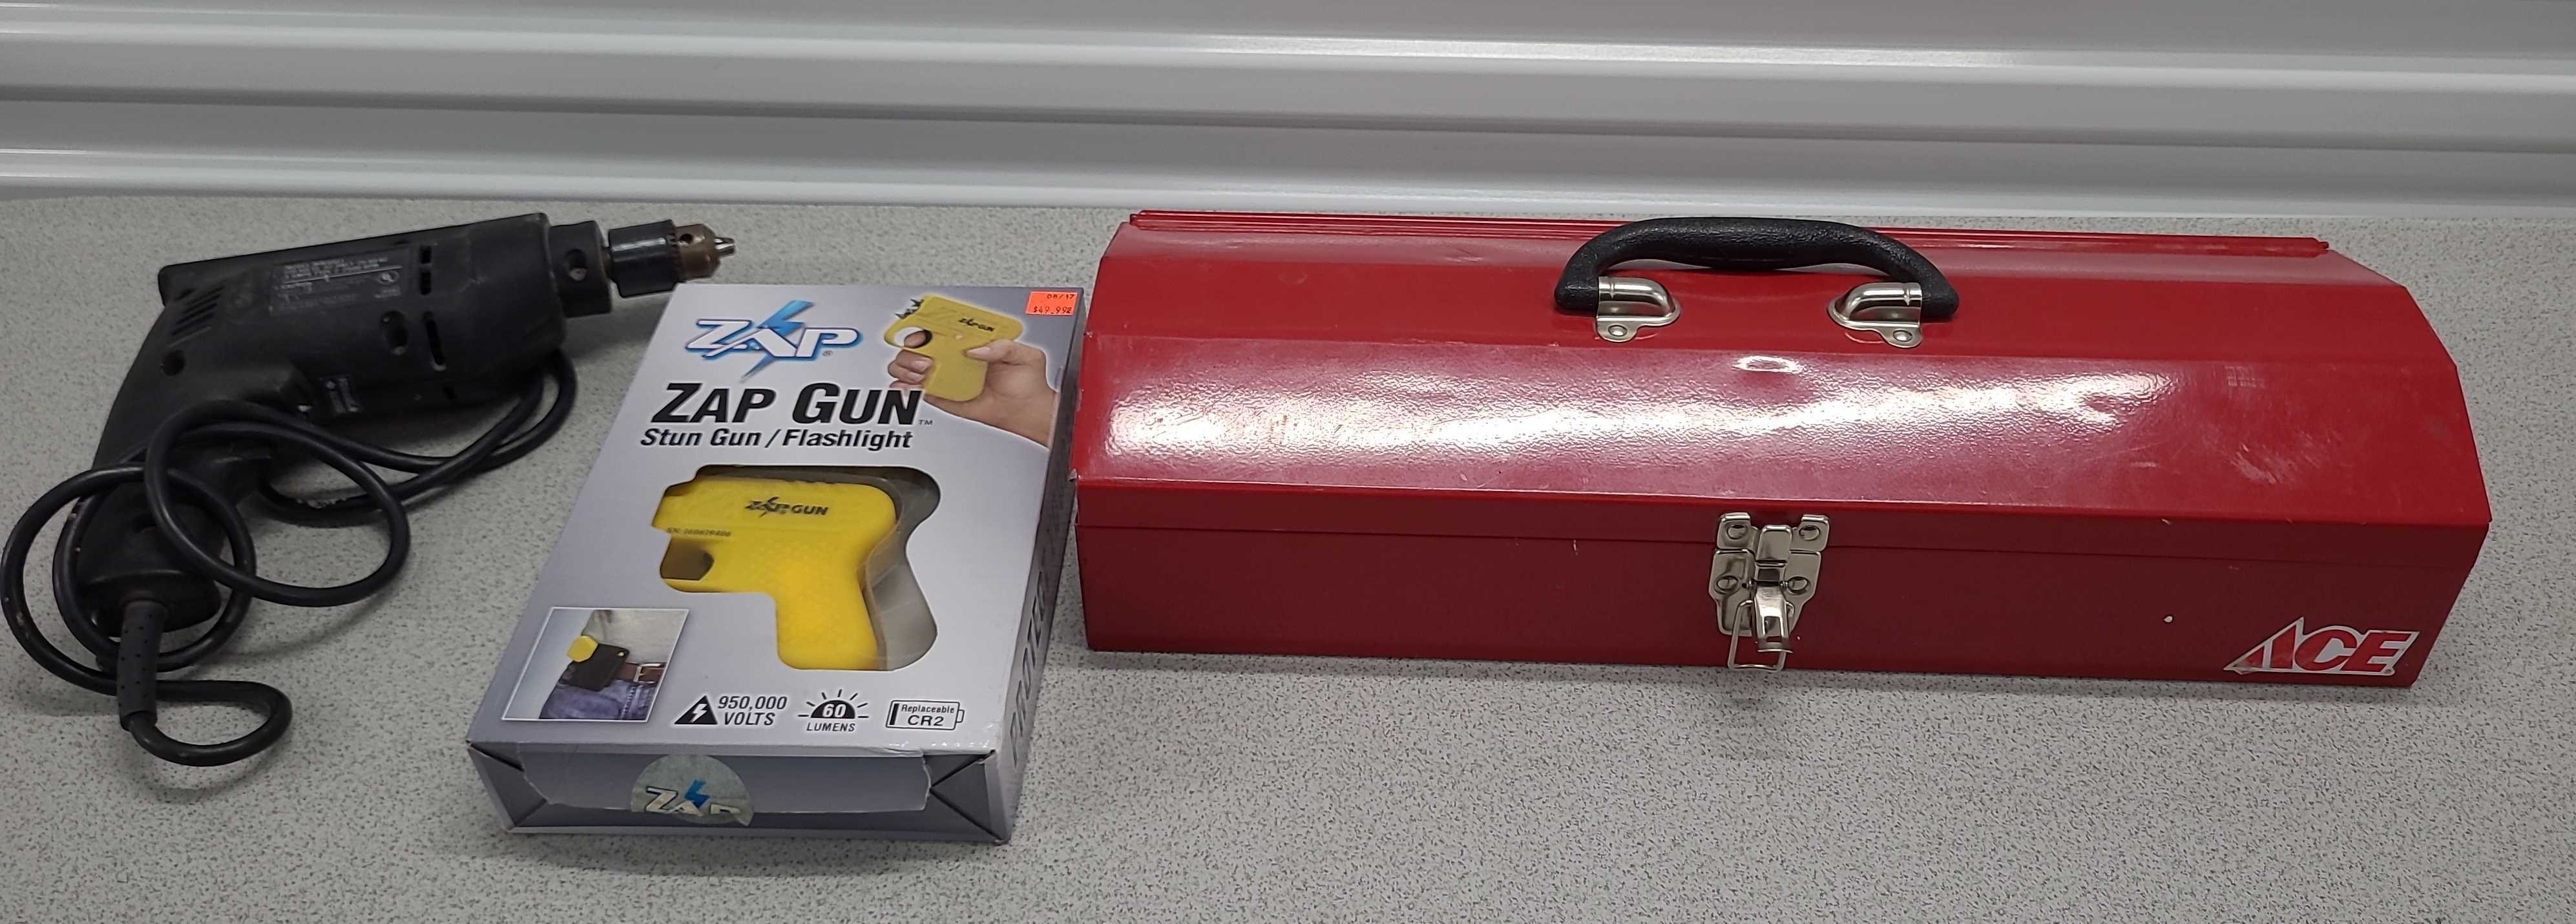 Stun-Gun-Tool-Box-And-Drill